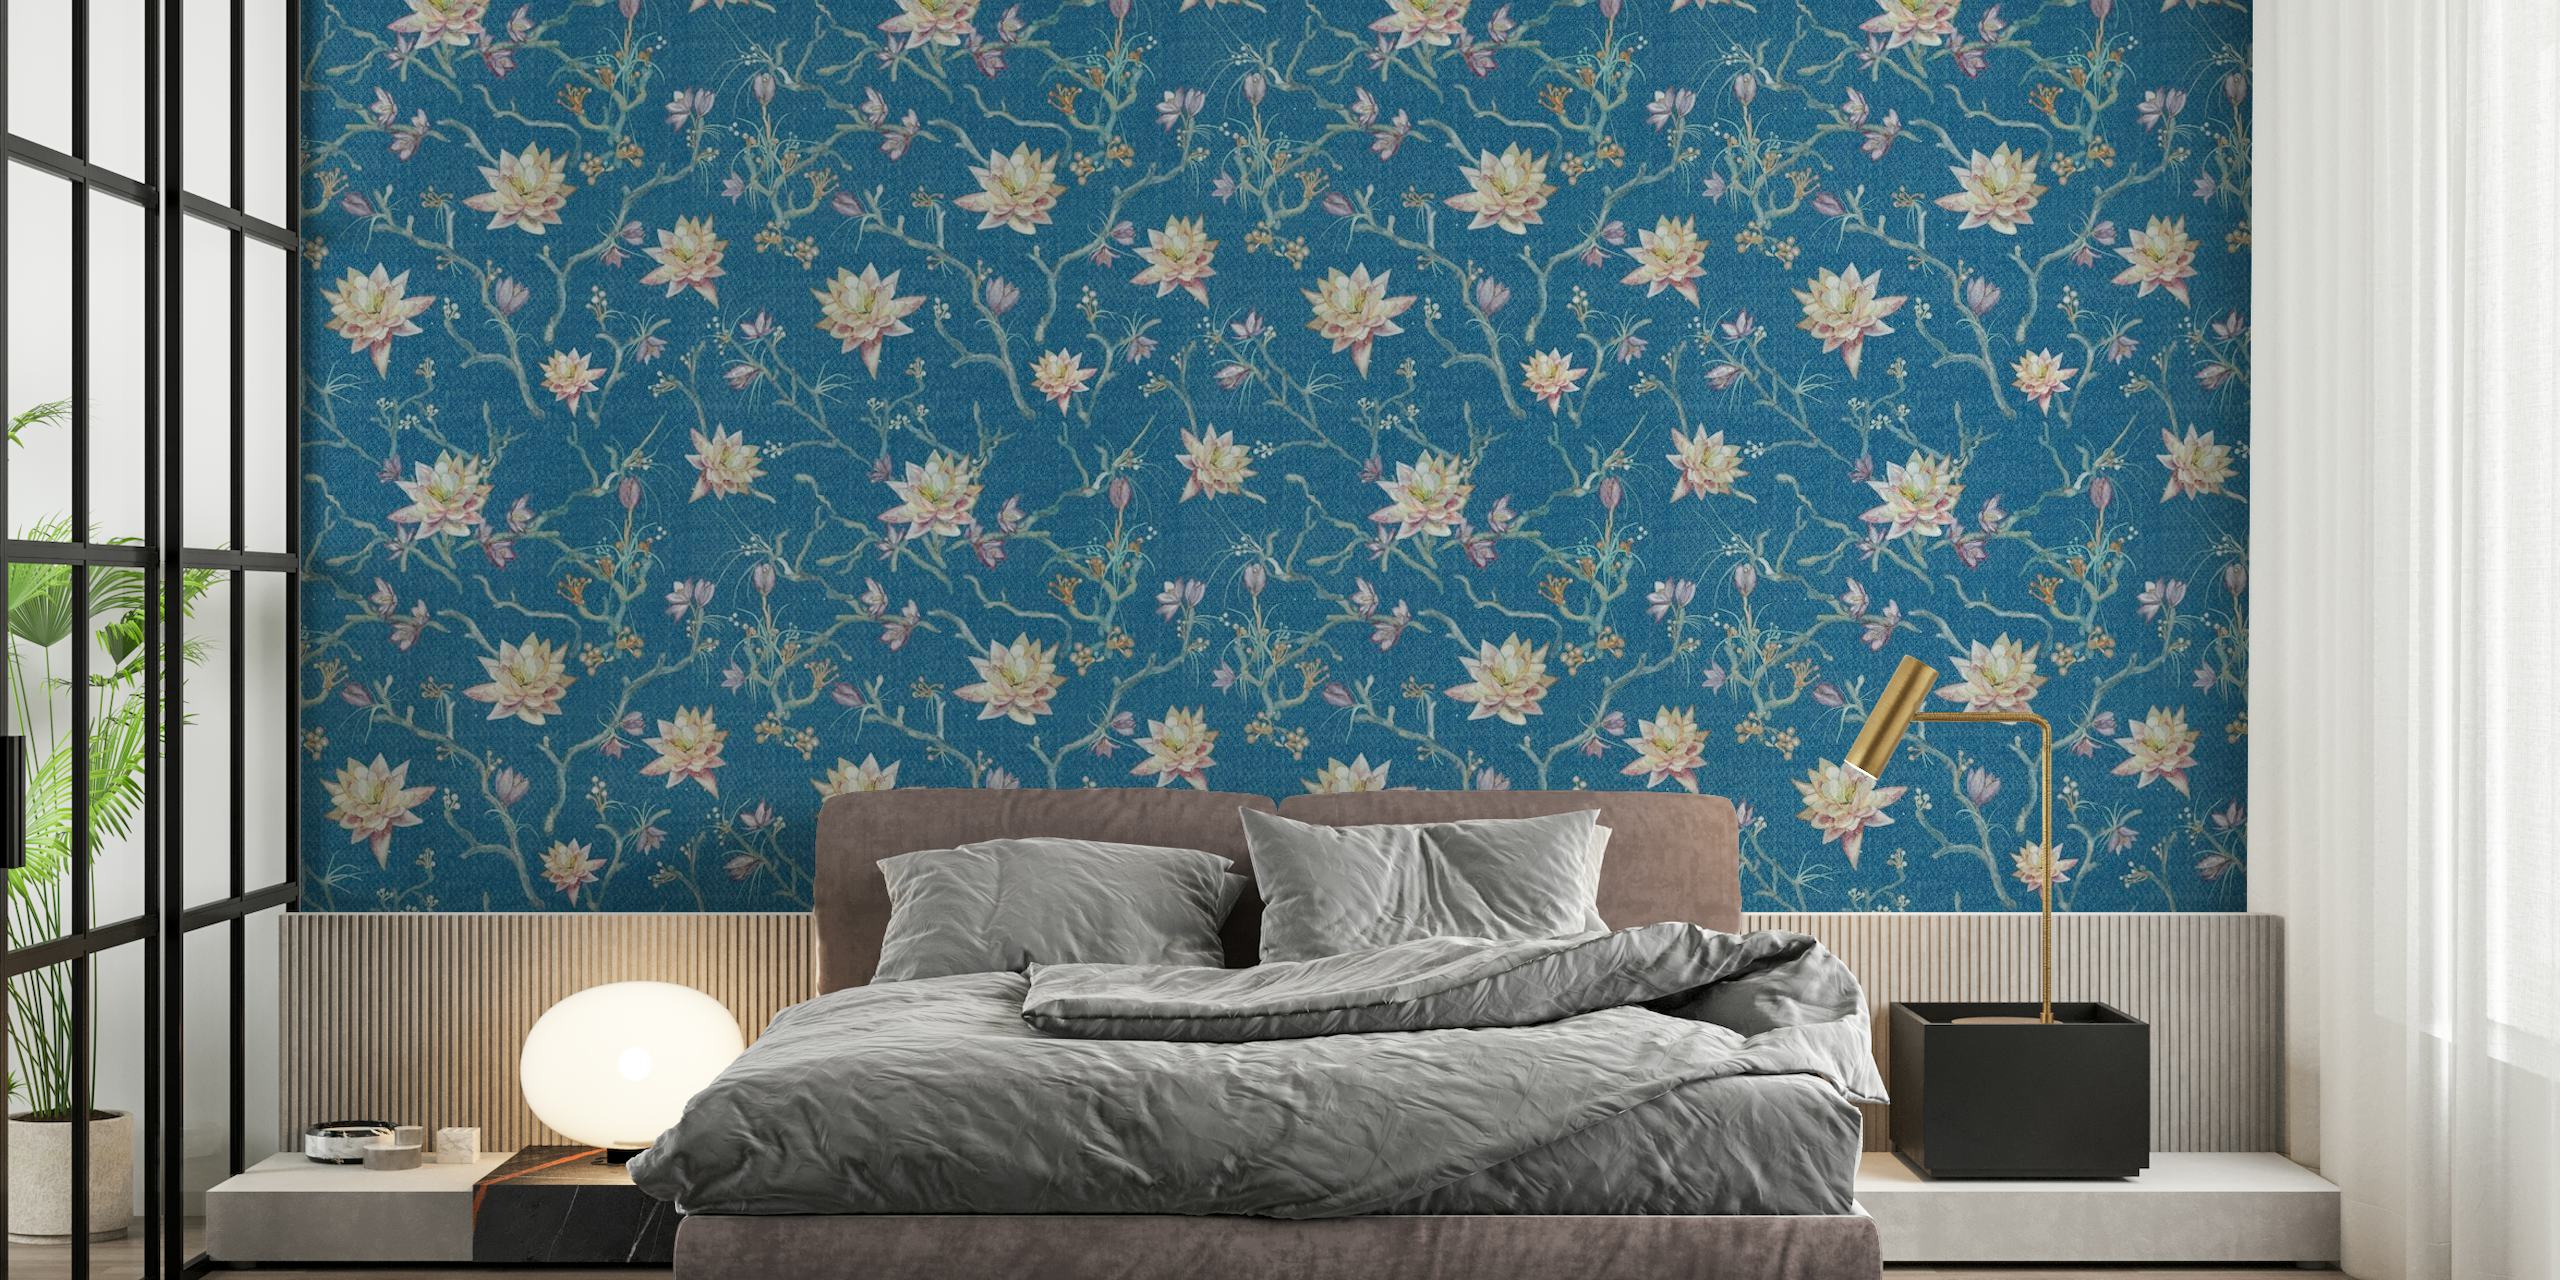 Lente Lotus muurschildering met blauwe achtergrond en witte bloeiende lotusbloemen